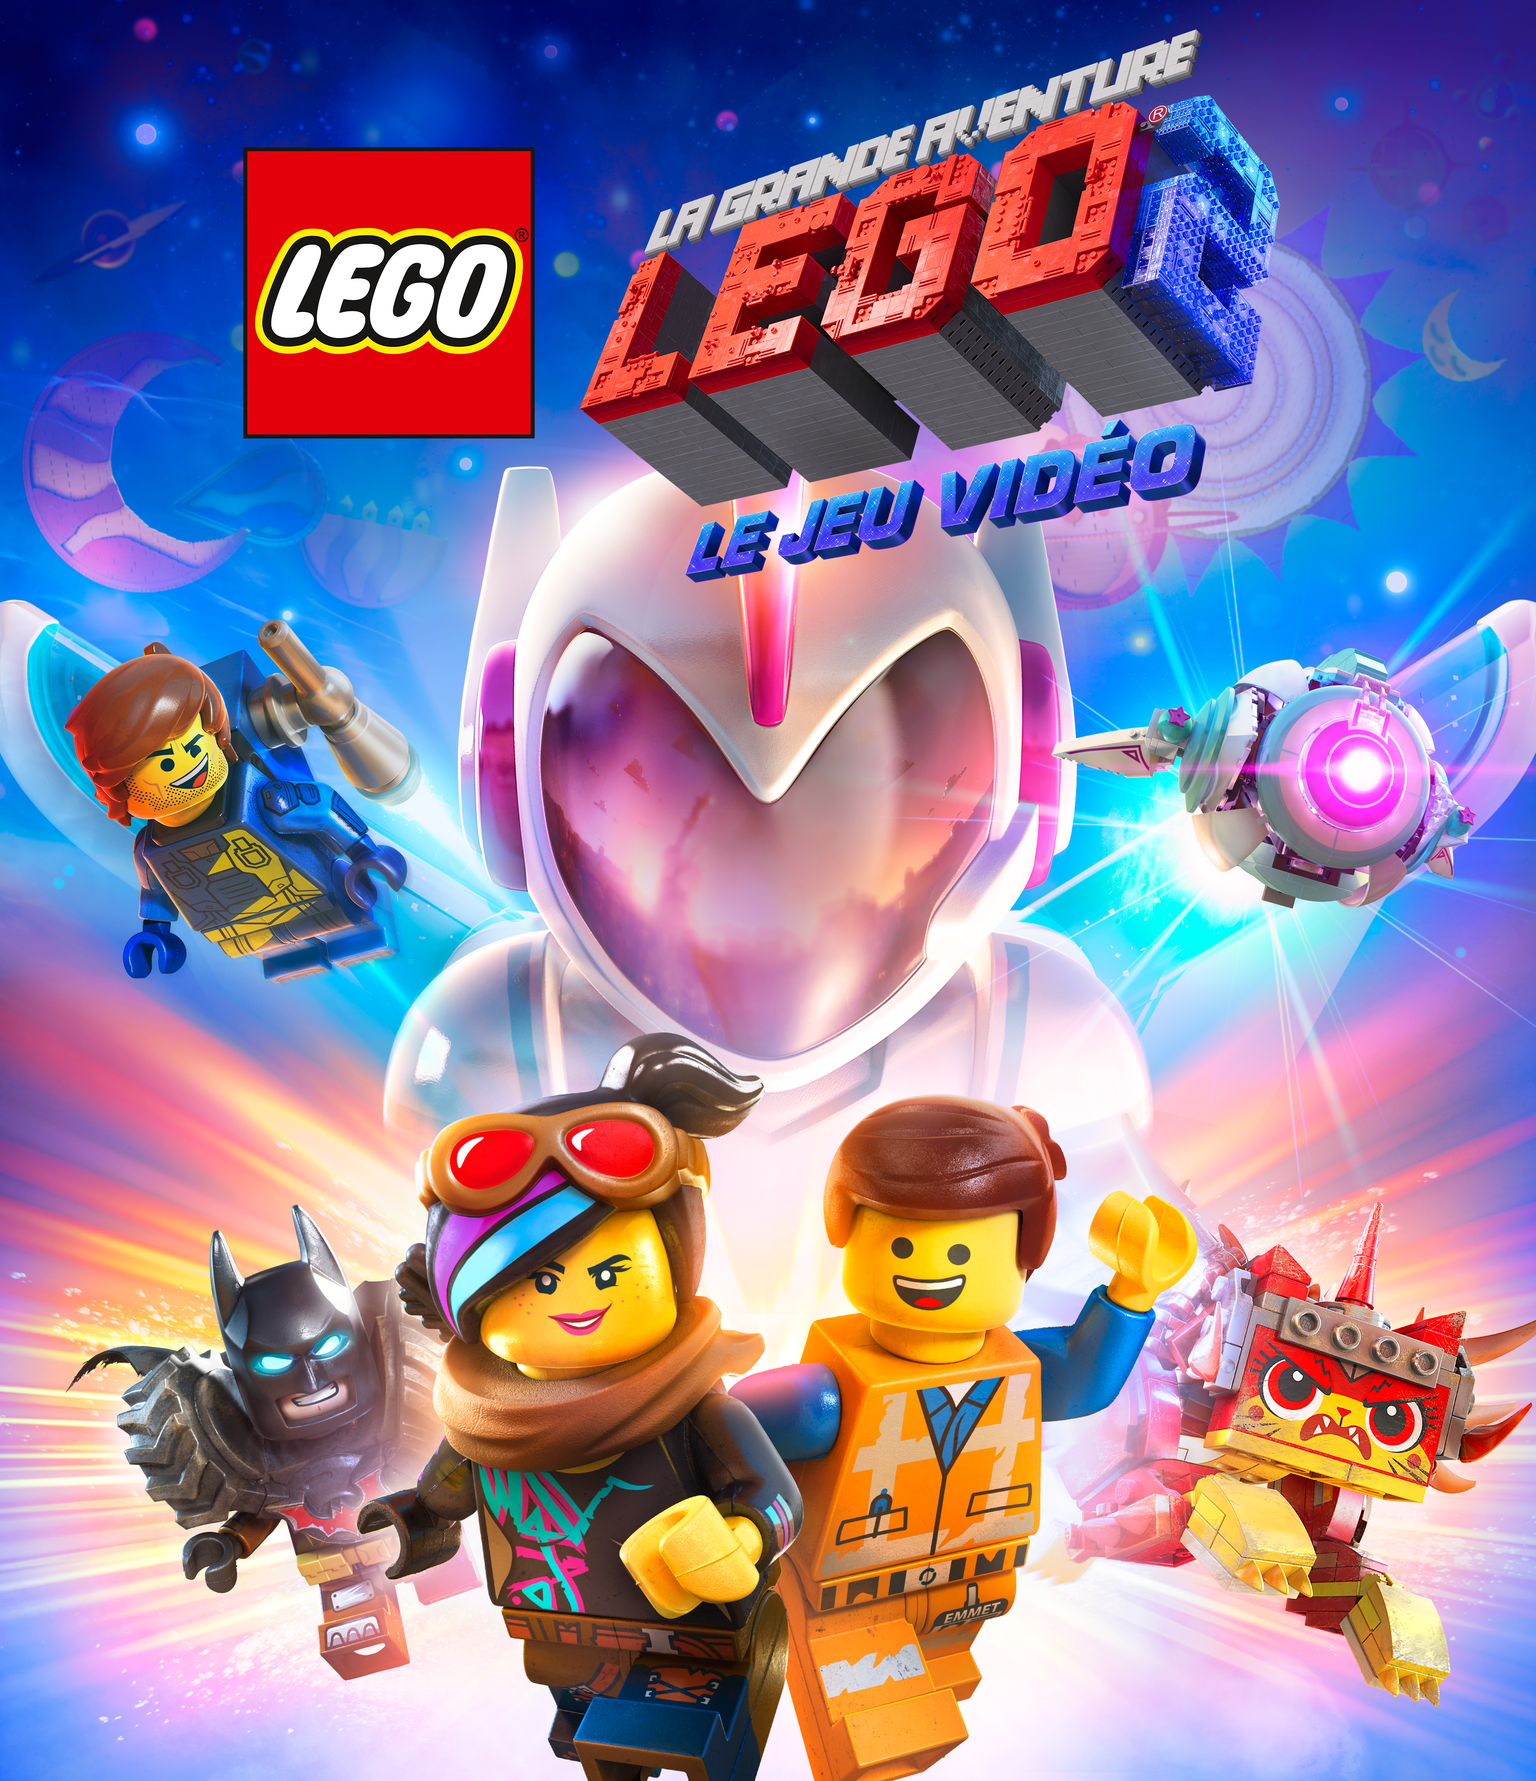 jaquette du jeu vidéo La Grande Aventure LEGO 2 : Le Jeu Vidéo